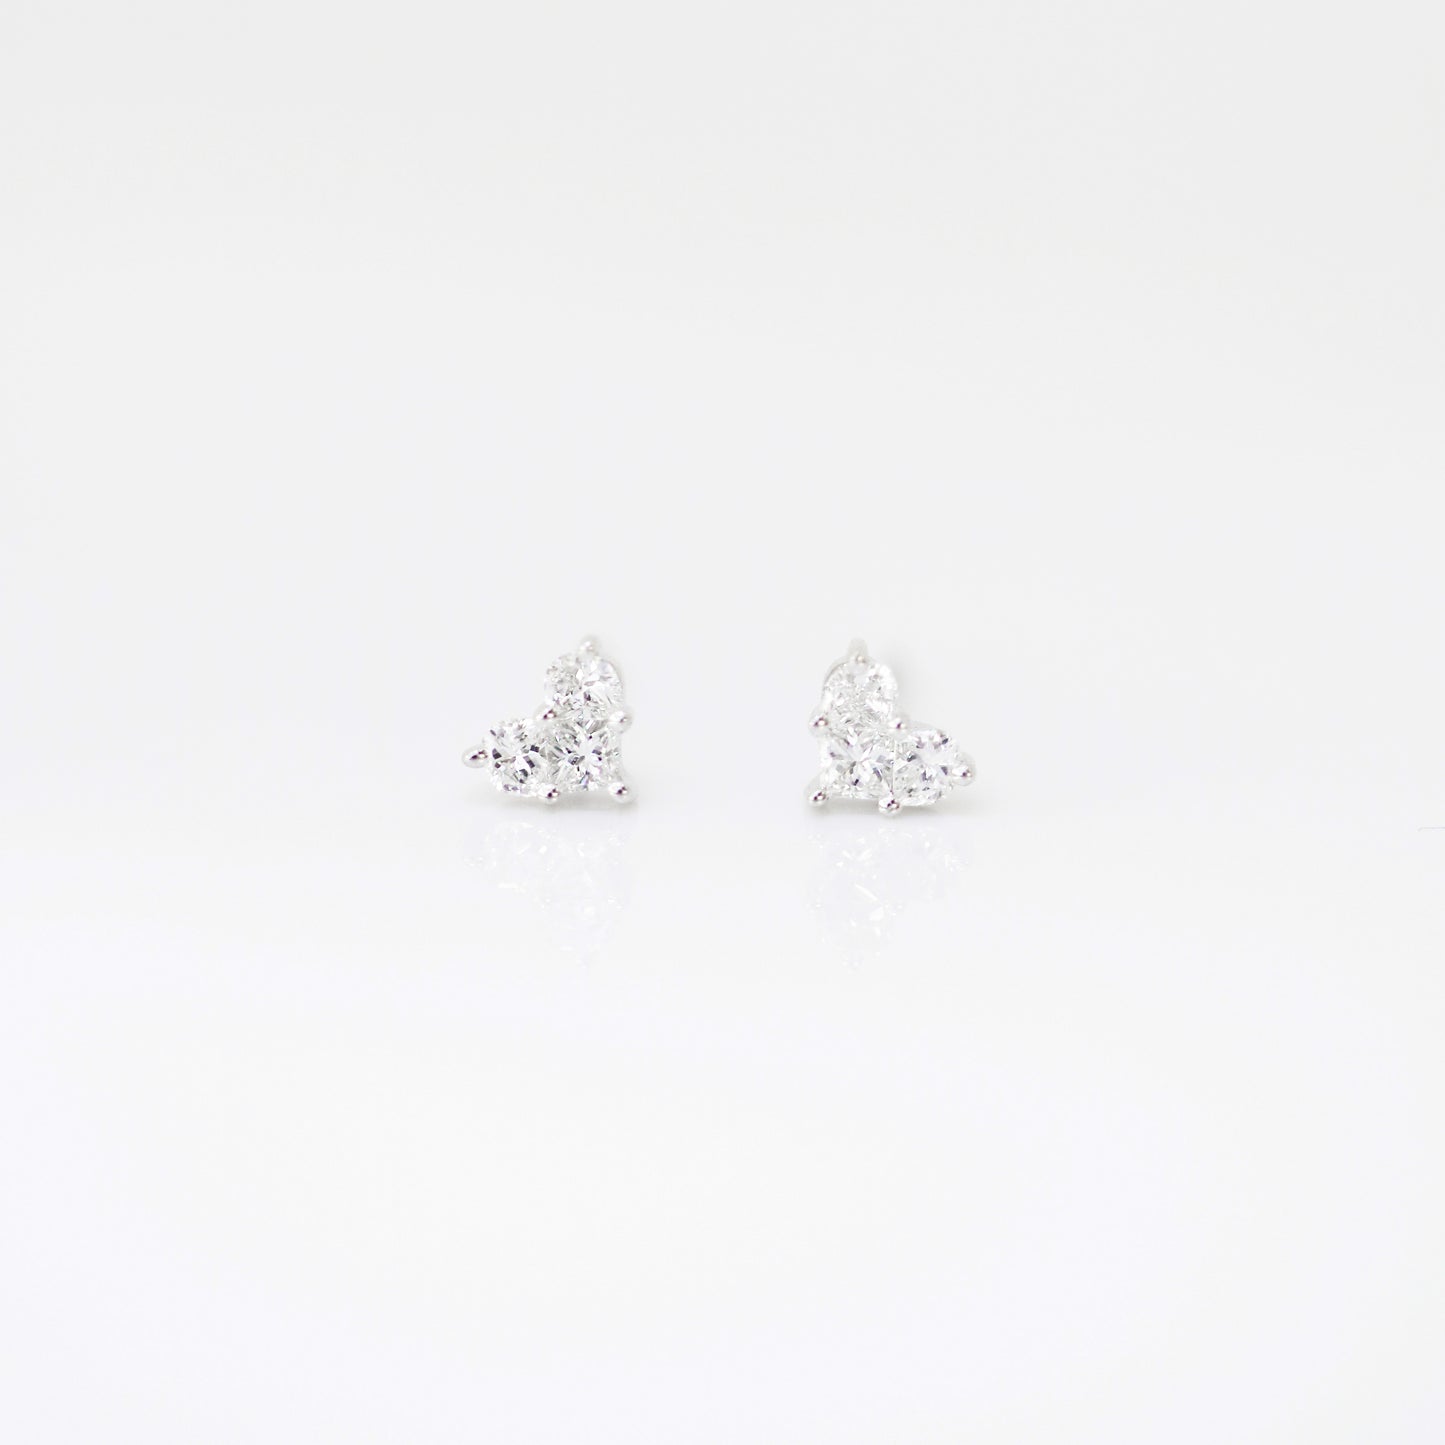 18k White Gold Pie Cut Heart Diamond Earrings, Single or Pair